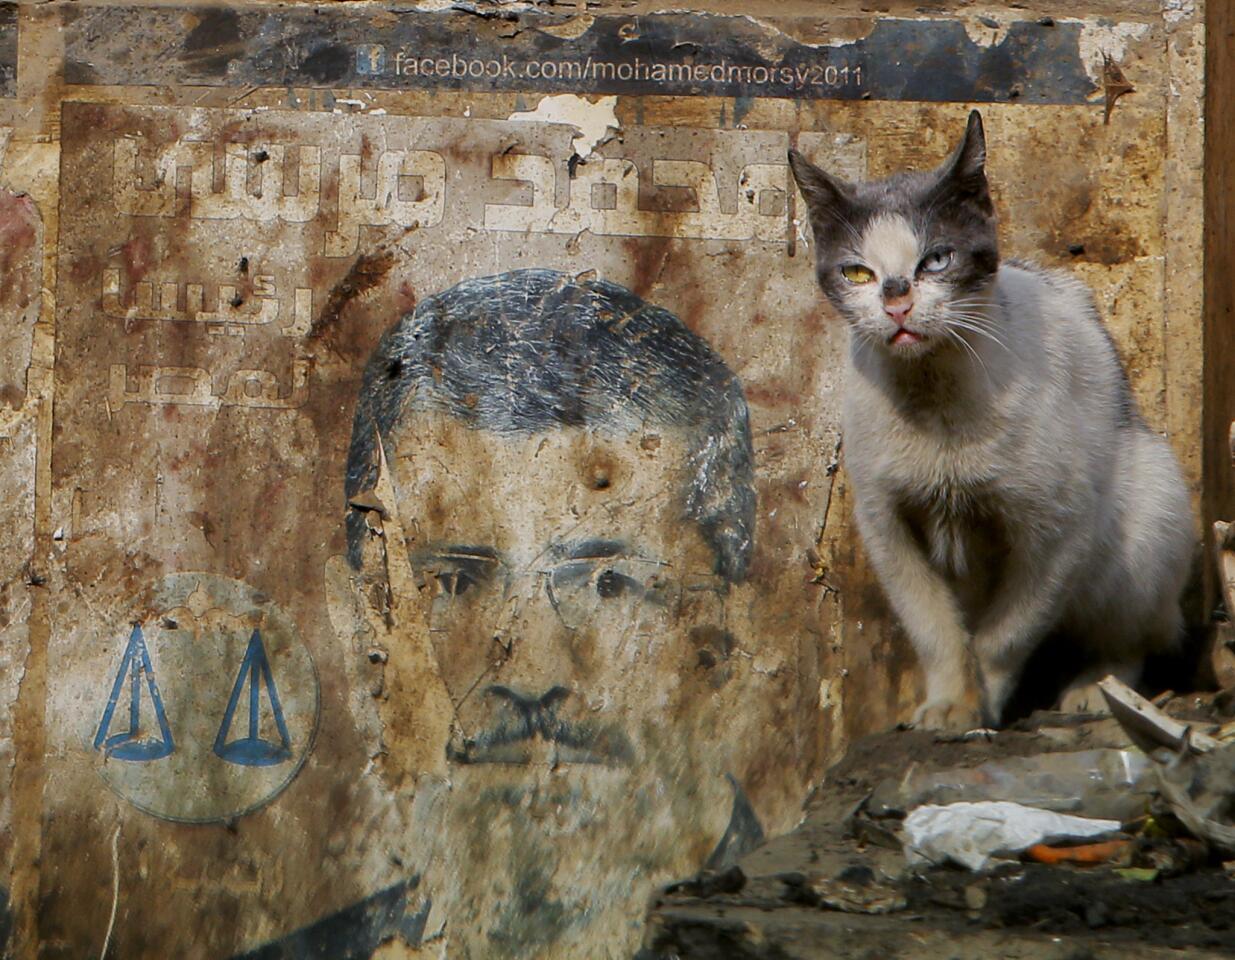 Morsi and a cat